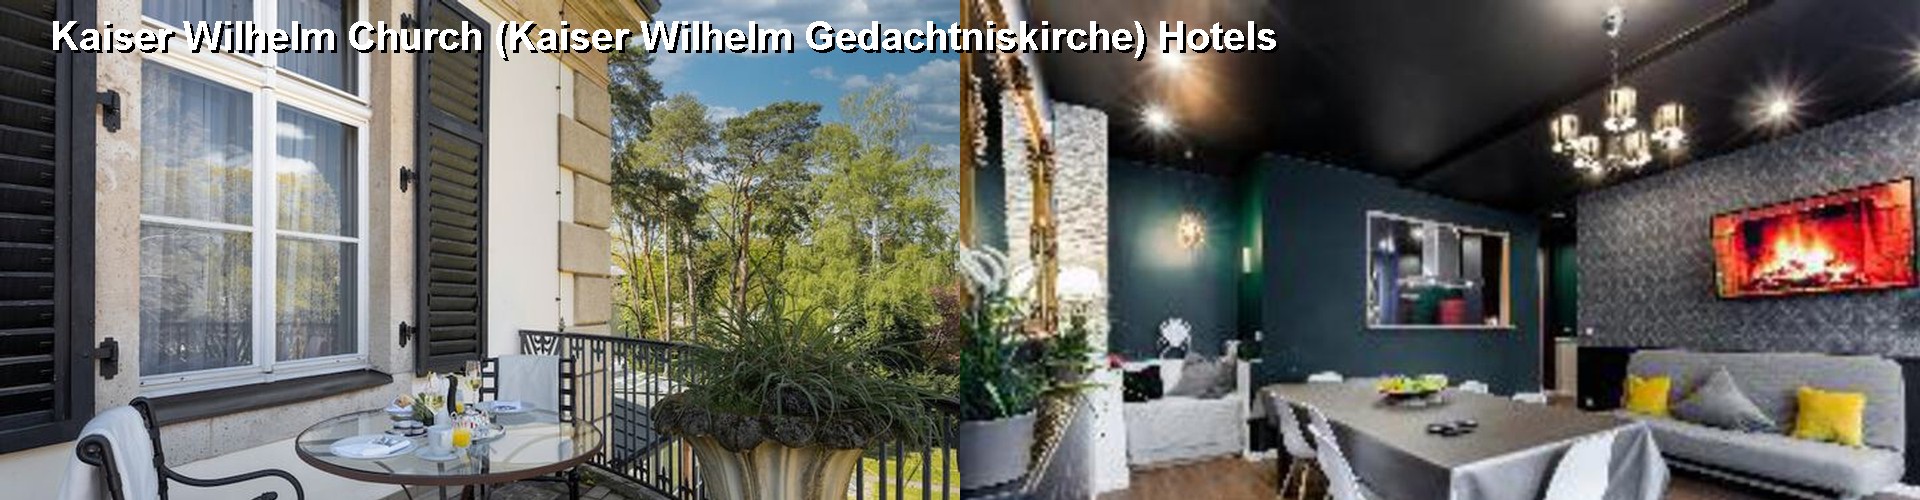 5 Best Hotels near Kaiser Wilhelm Church (Kaiser Wilhelm Gedachtniskirche)